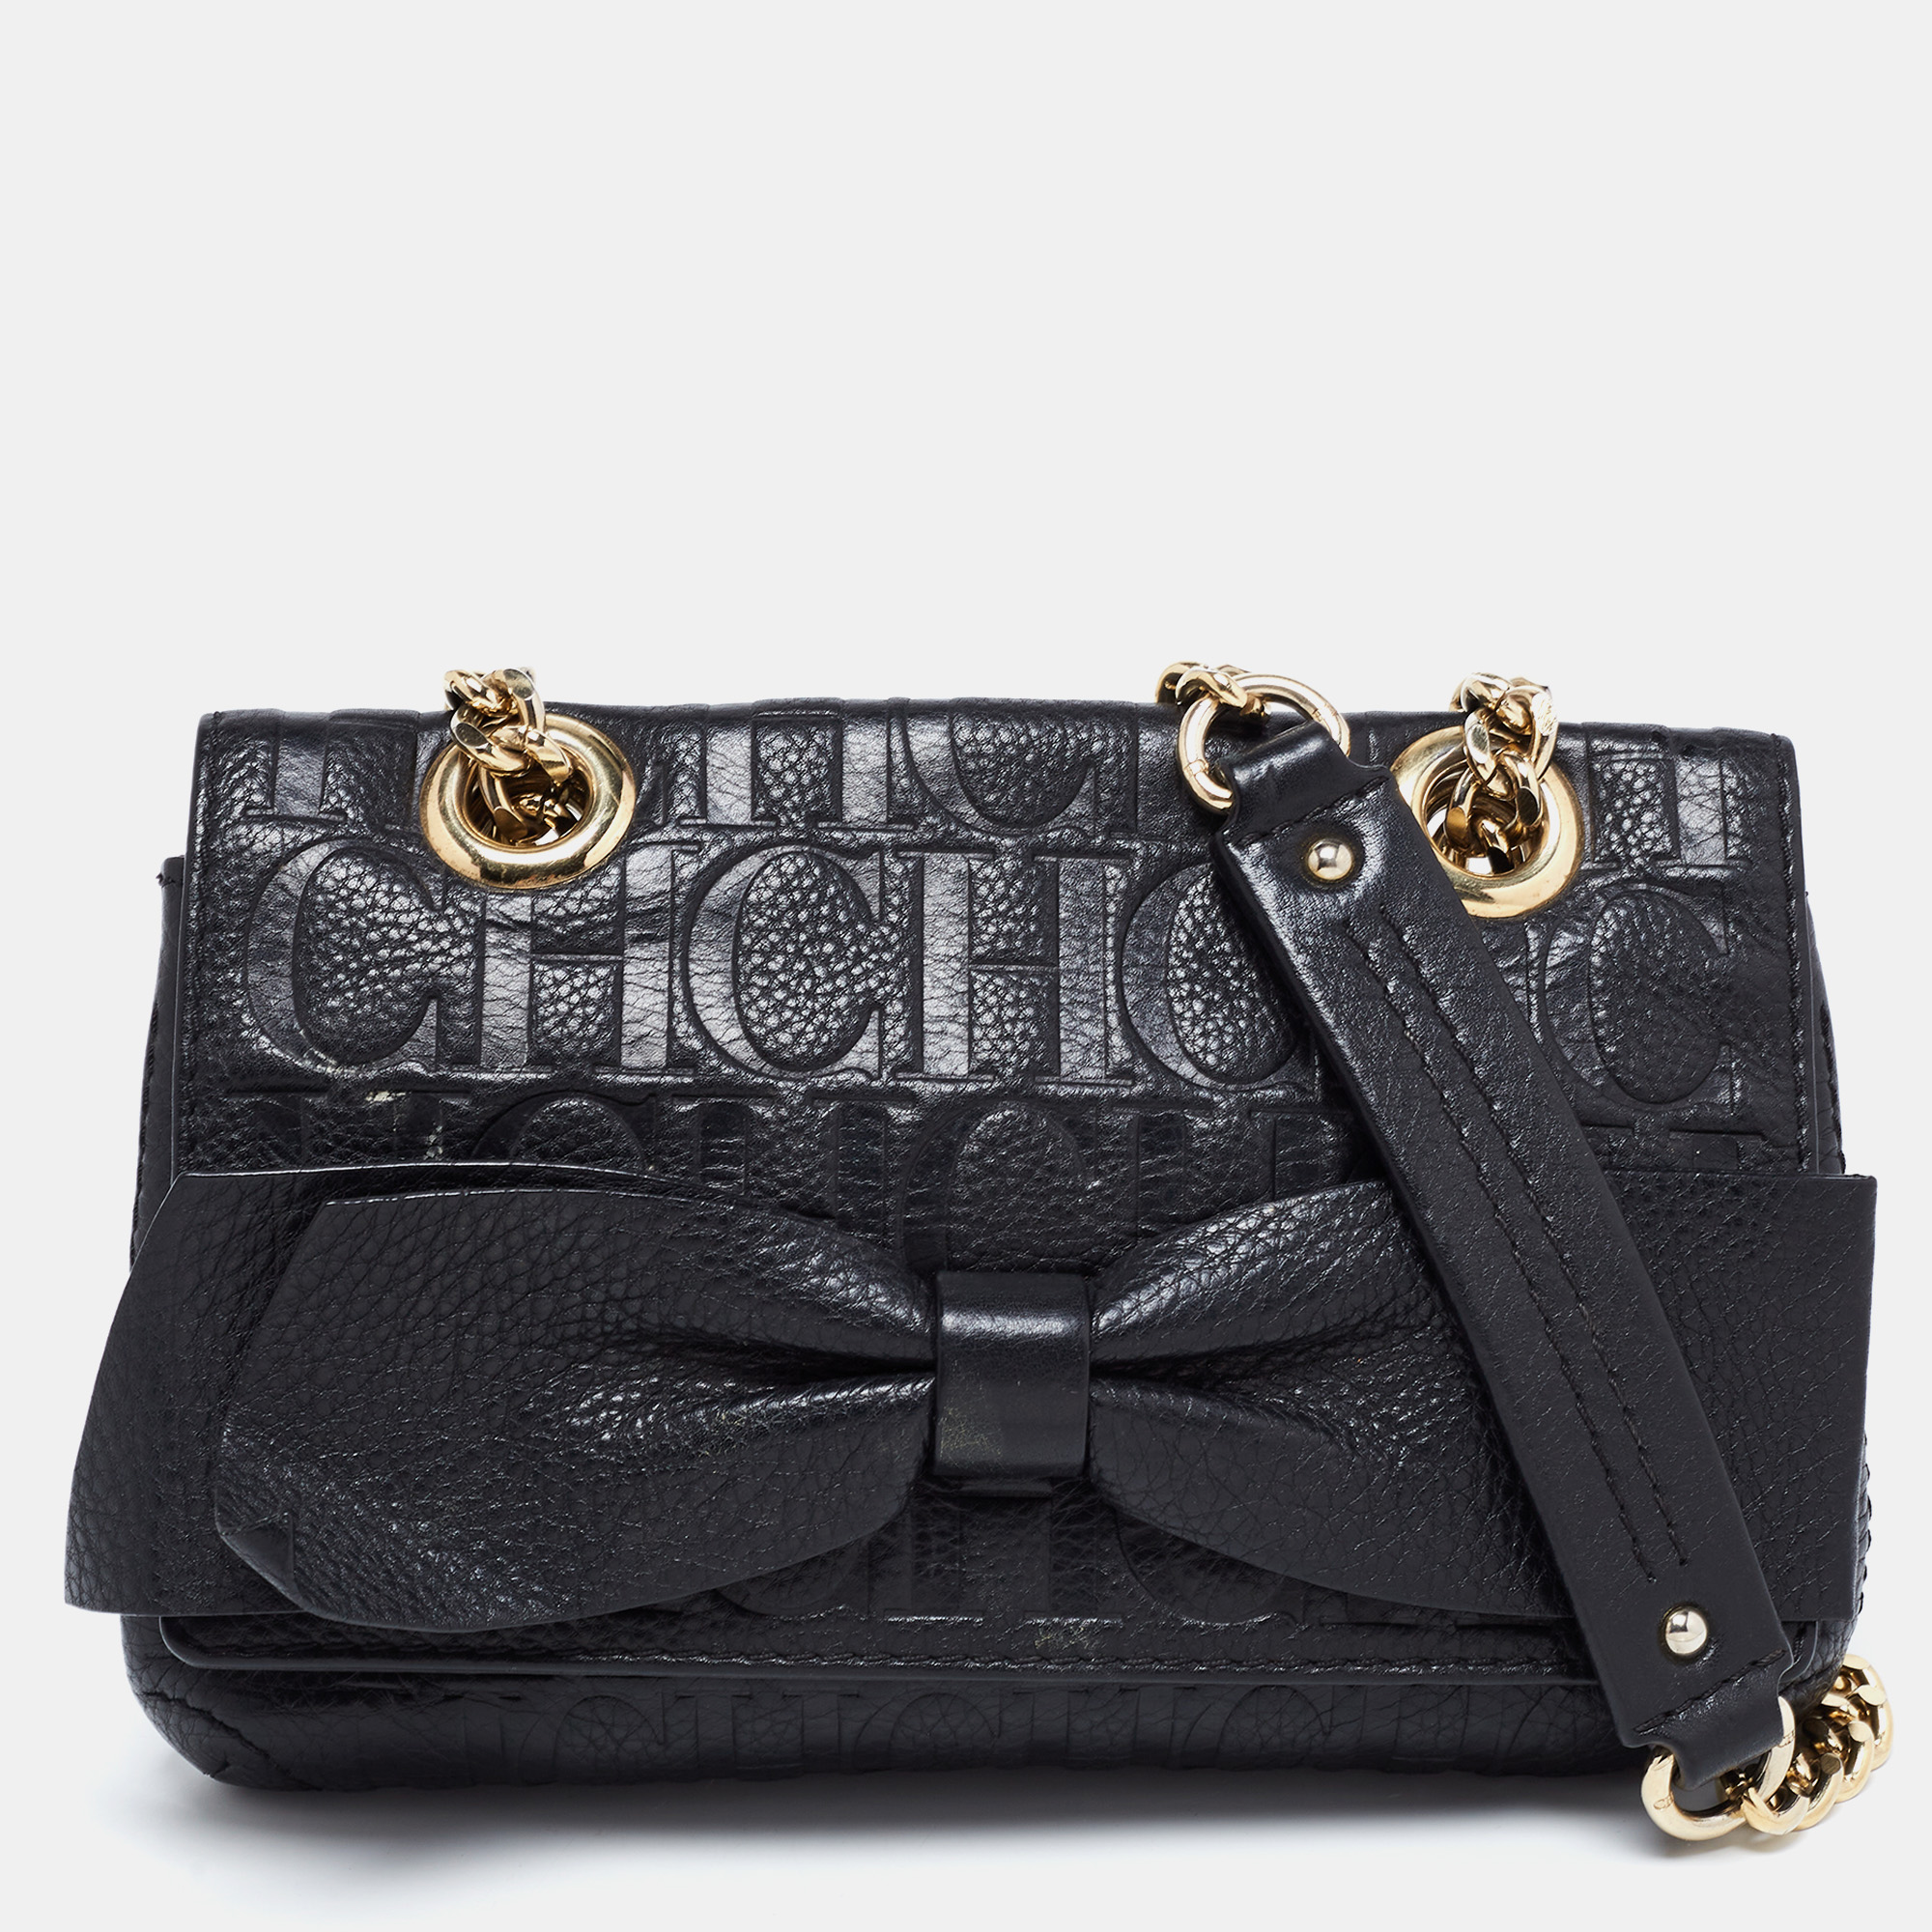 Carolina Herrera Black Monogram Leather Bow Chain Clutch